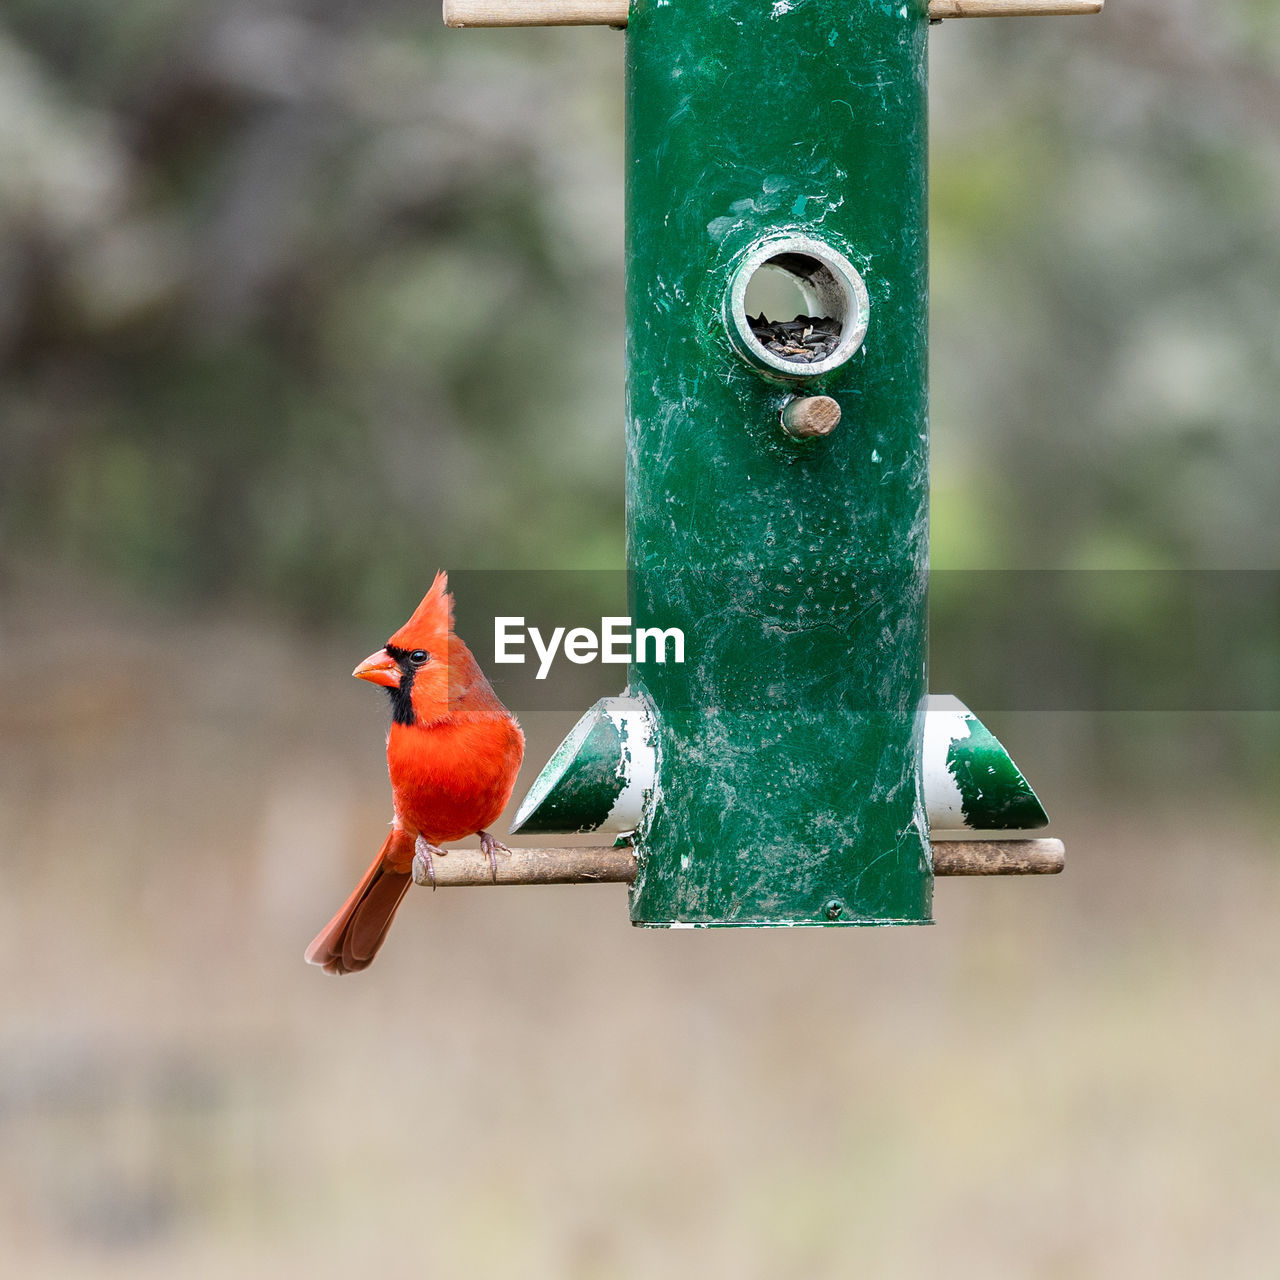 Cardinal on a bird feeder